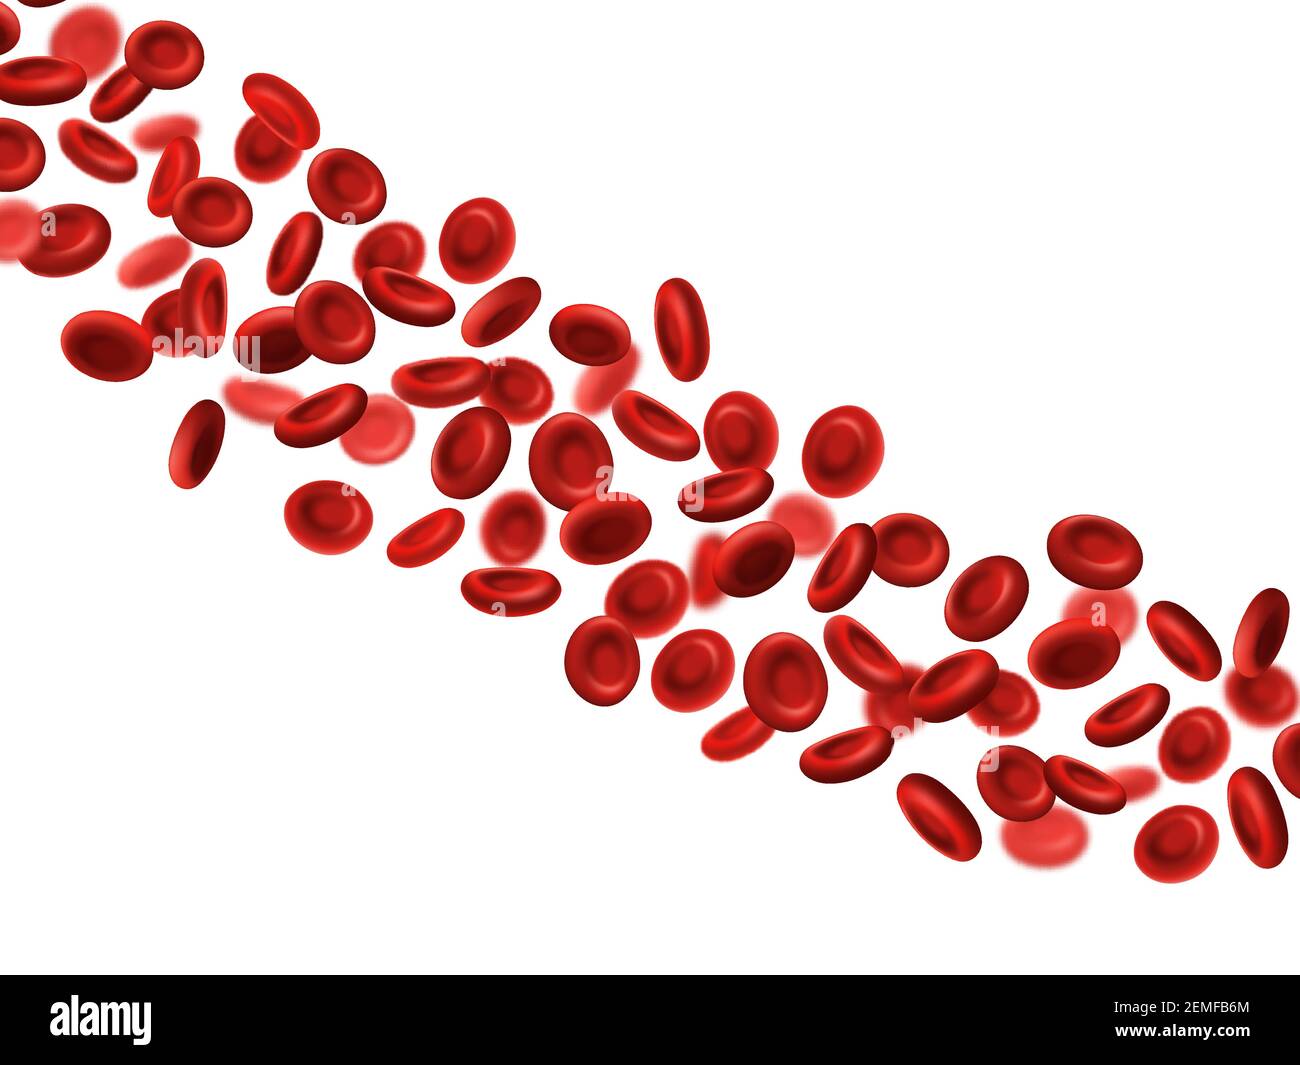 Rote Blutkörperchen, medizinische Hämoglobin Erythrozyten, Vektor medizinische Arterie Blutfluss. 3D rote Blutkörperchen der Vene für Medizin und Humanbiologie, Stock Vektor